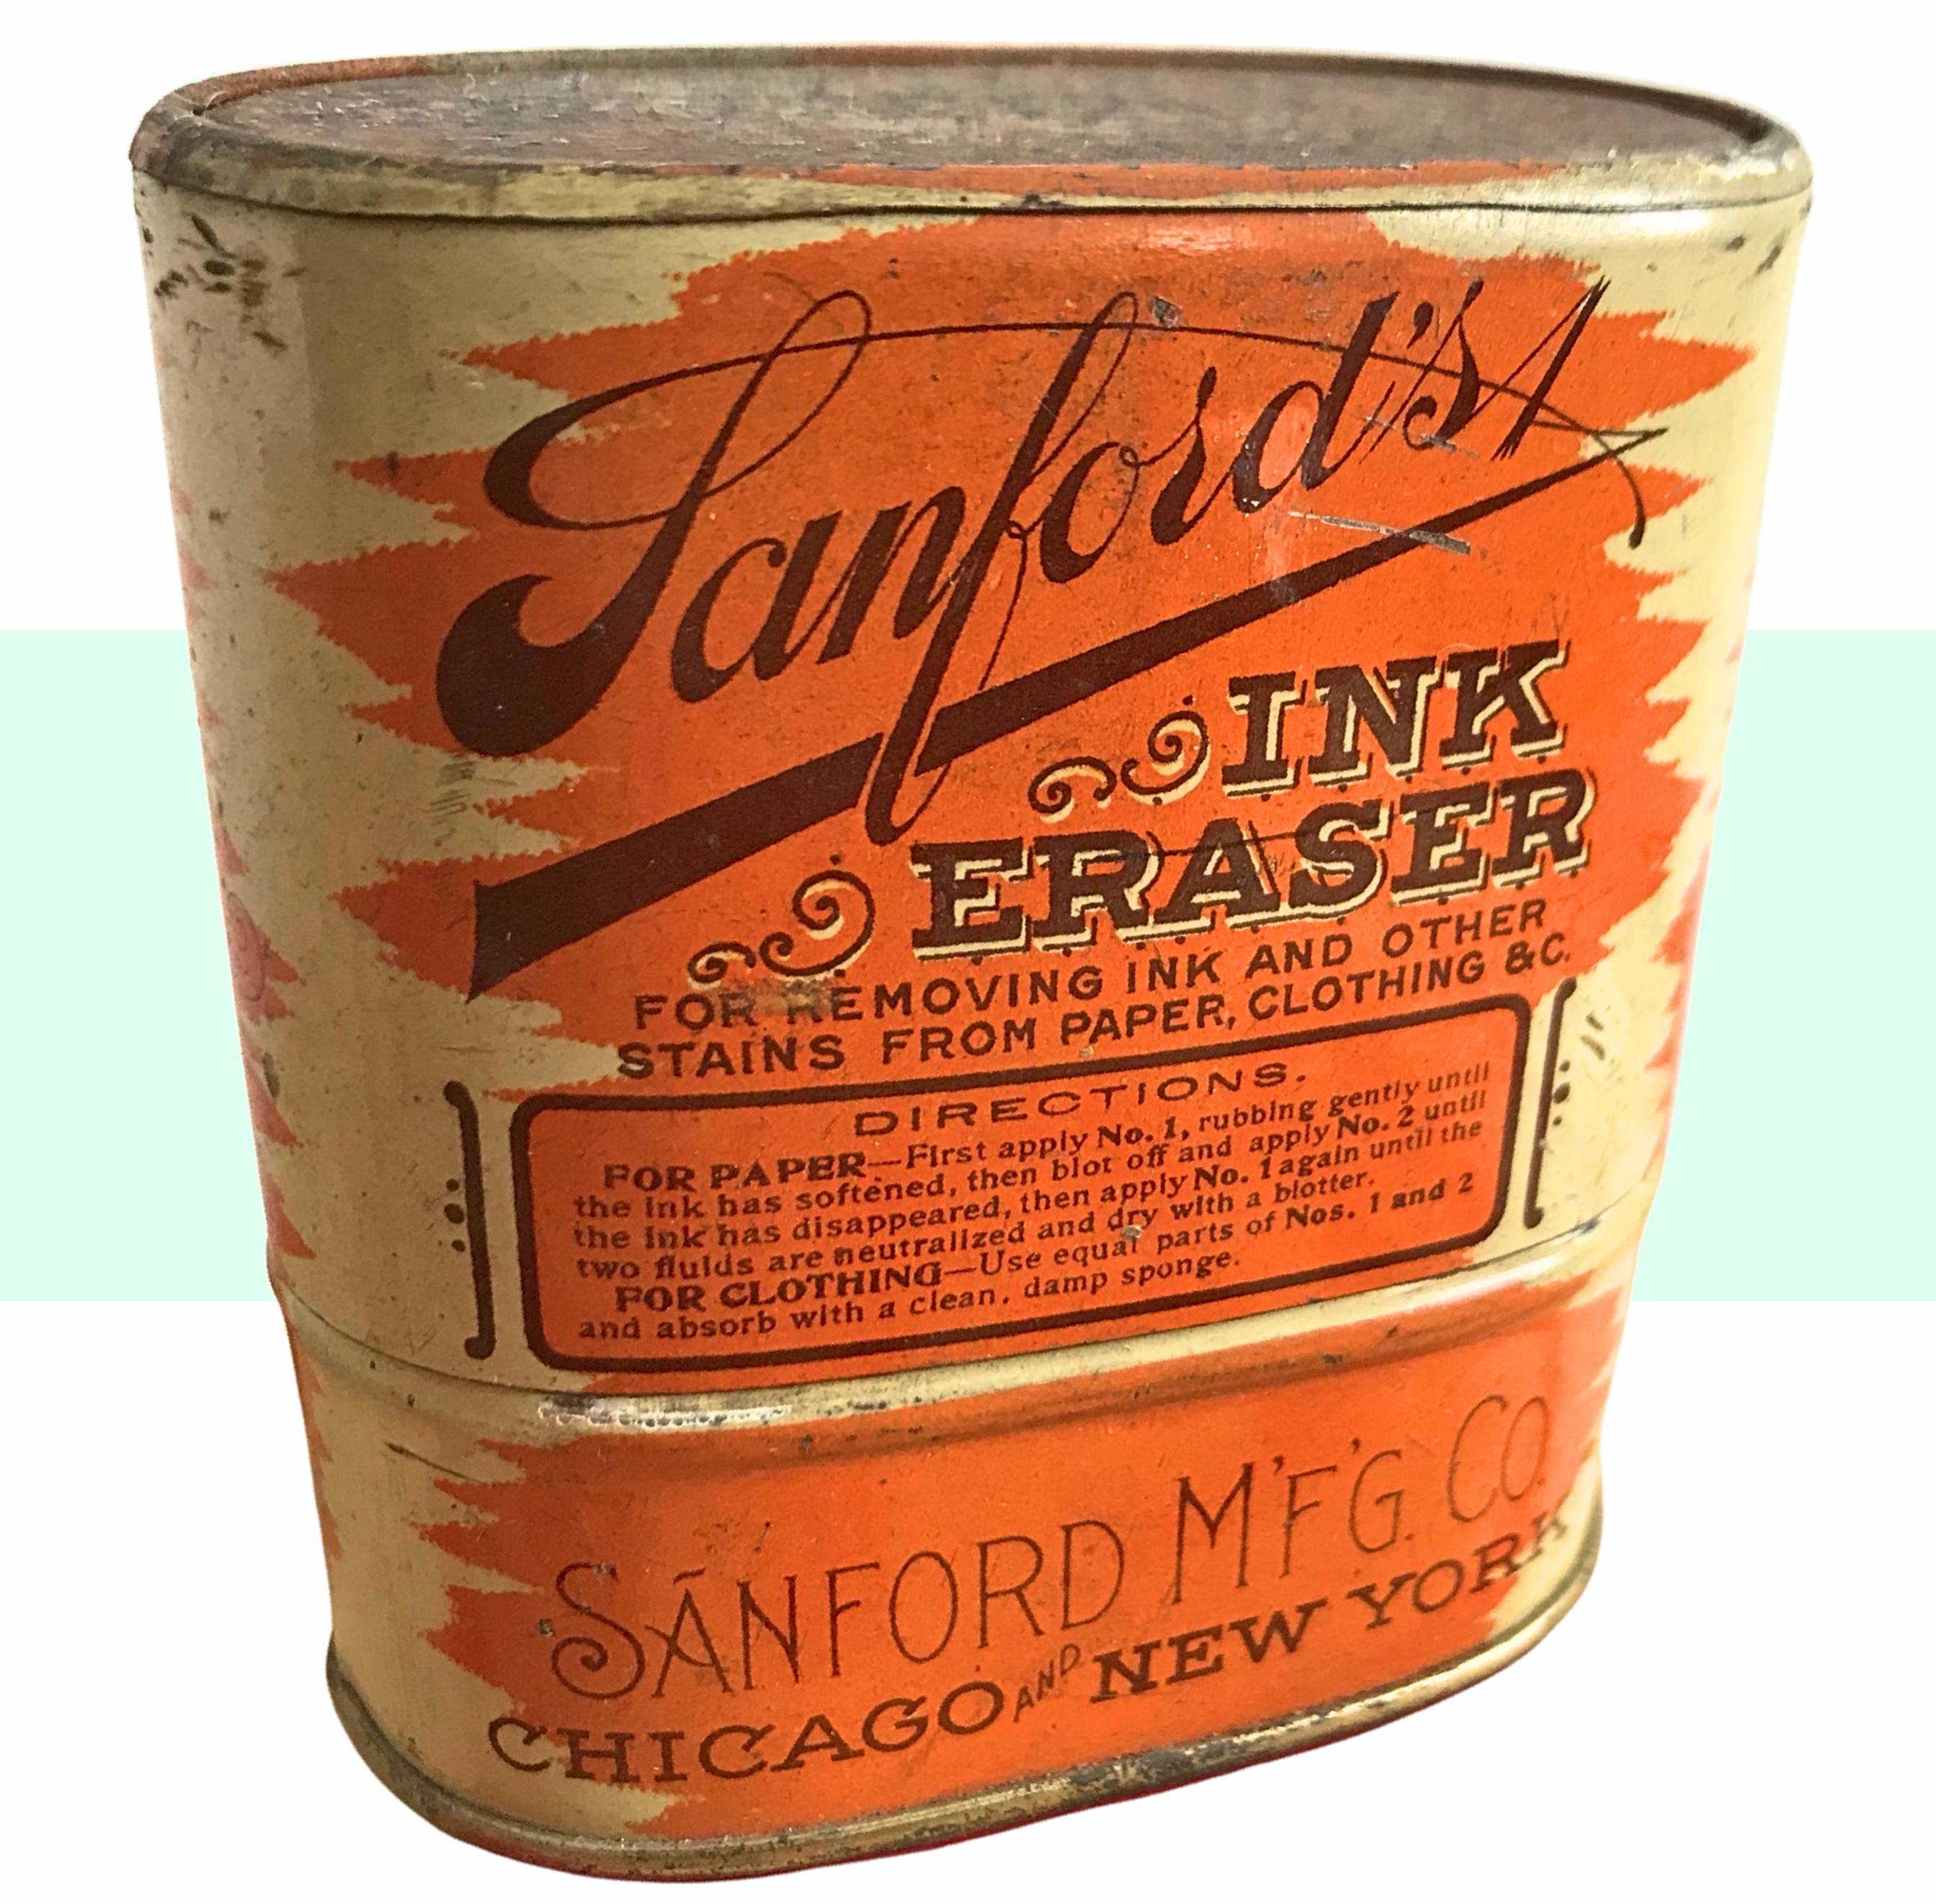 Sanford Ink Company, est. 1857